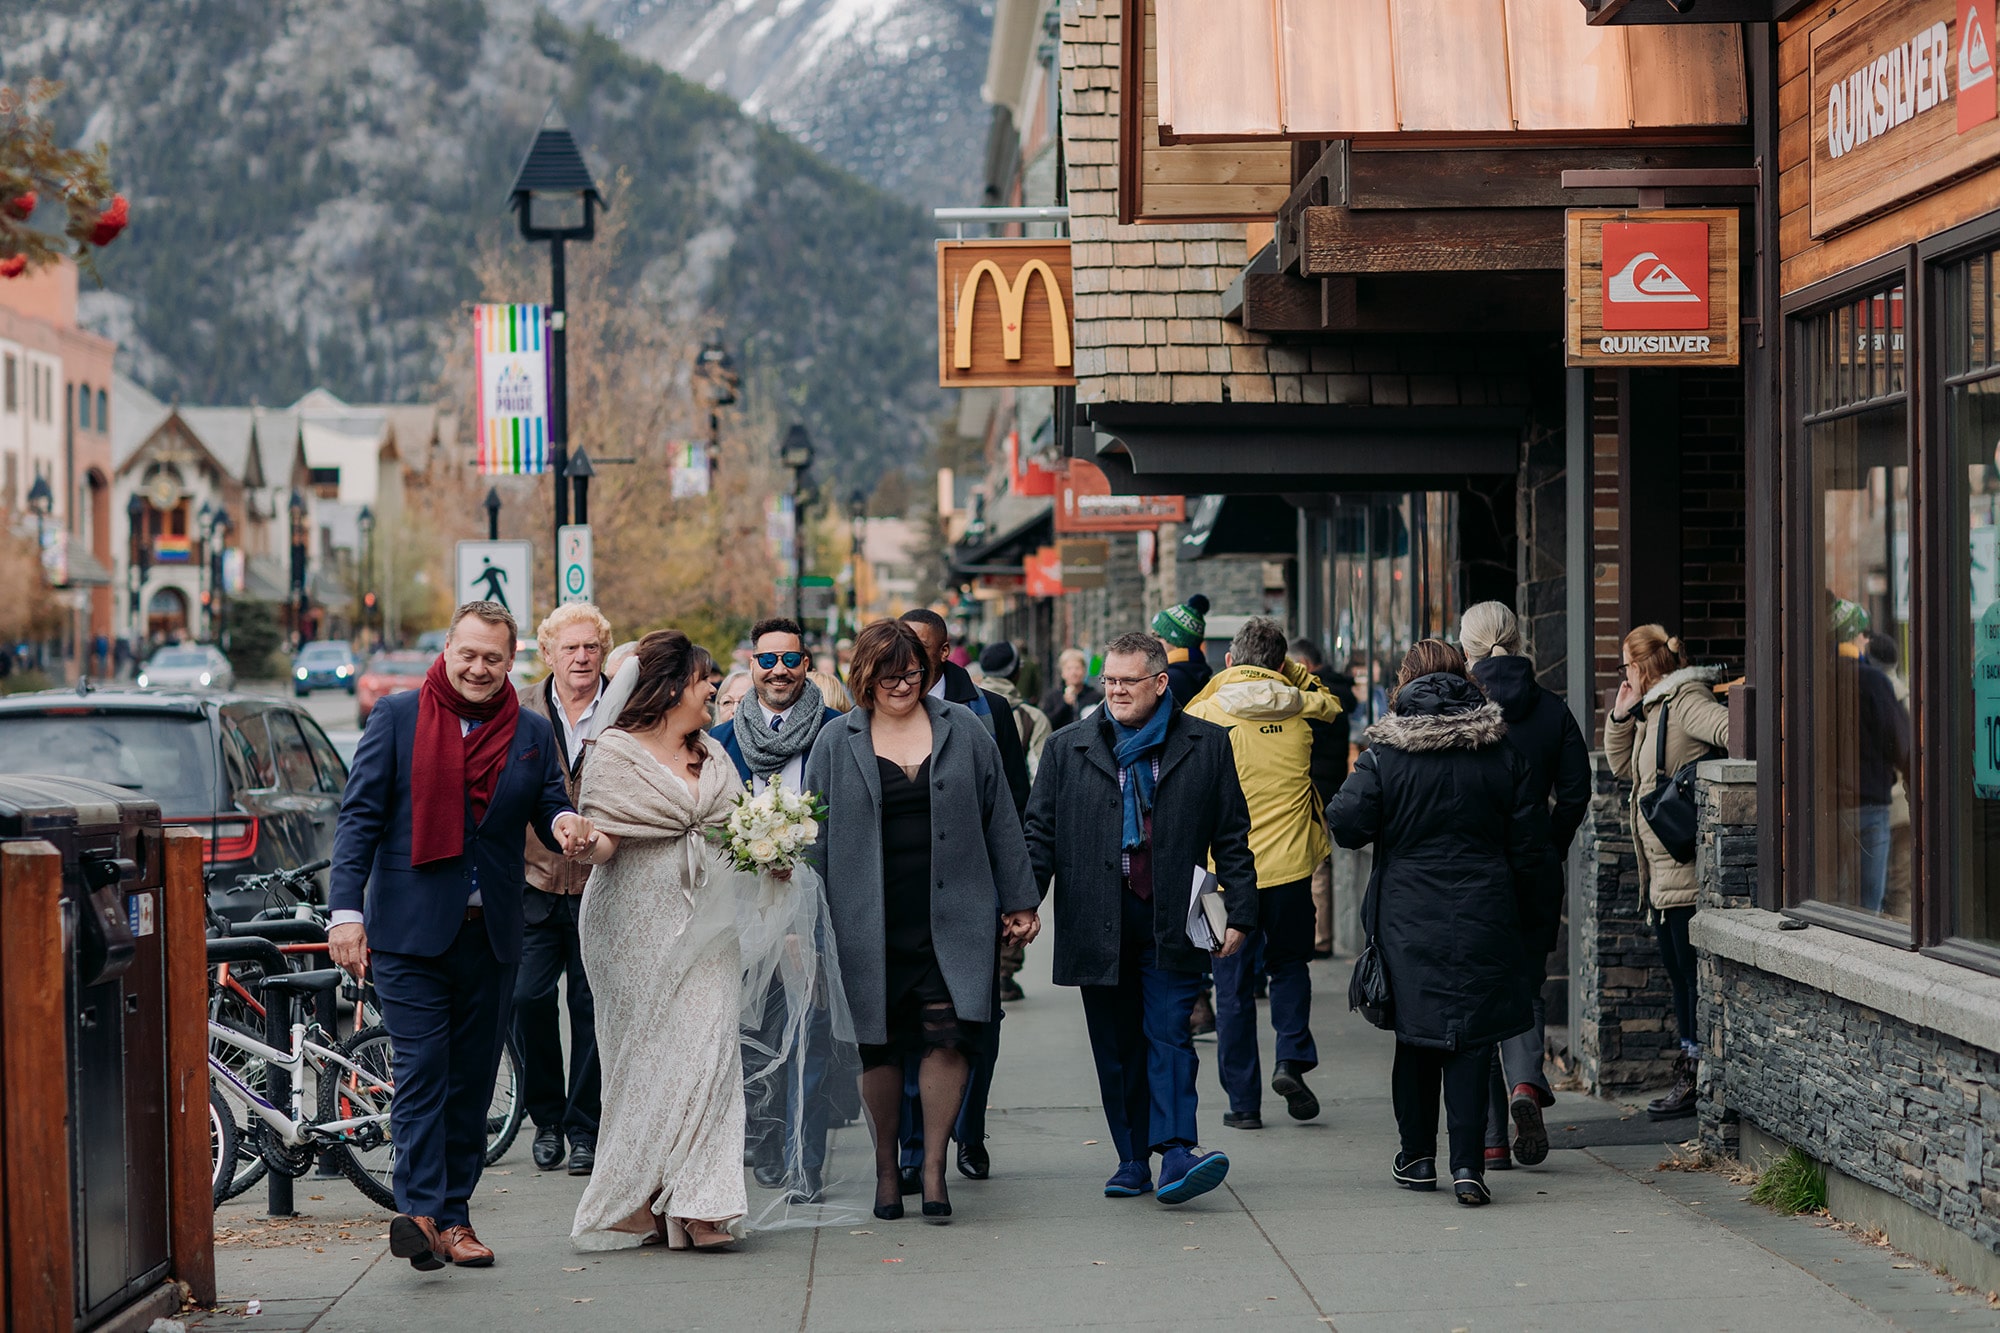 Banff wedding parade stroll through town